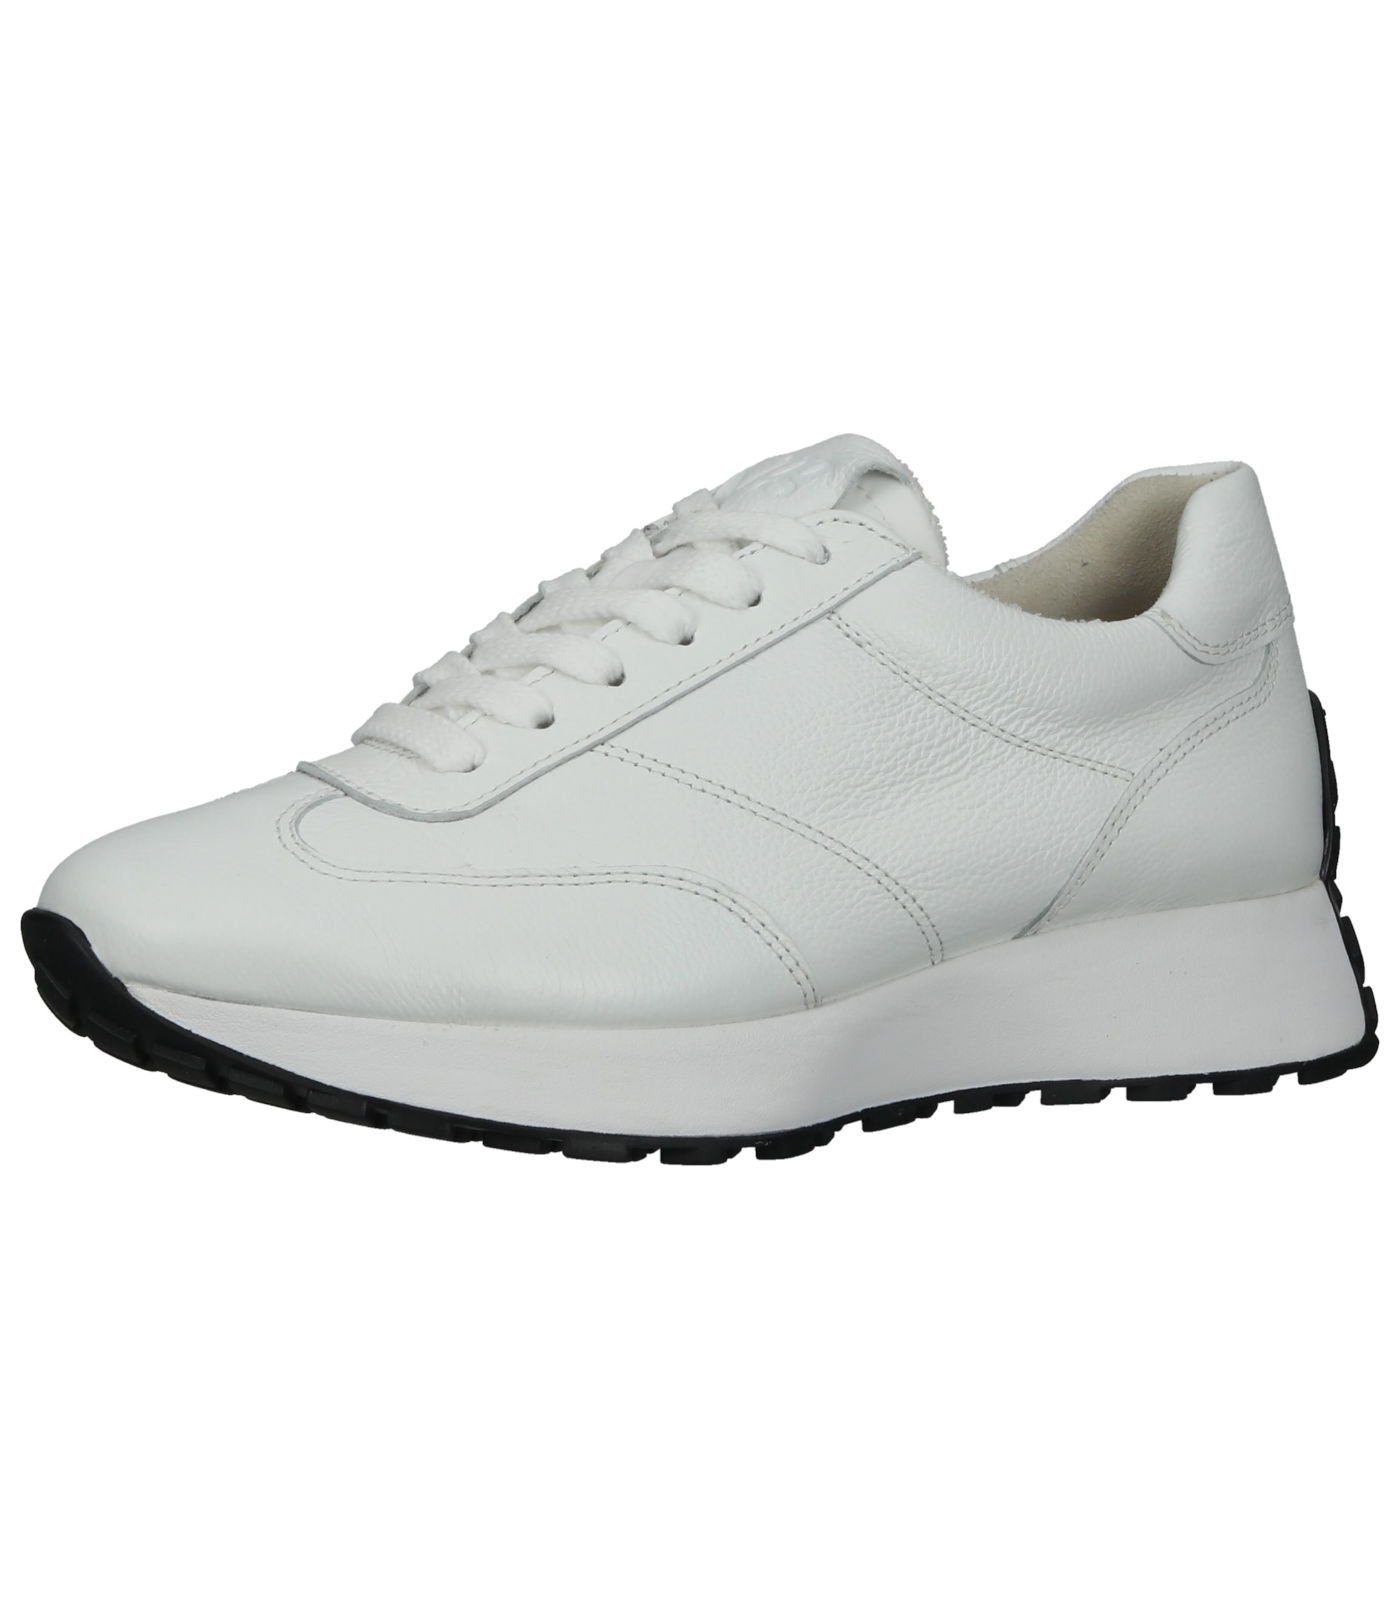 Paul Leder/Textil Sneaker Sneaker Green (17001602) Weiß